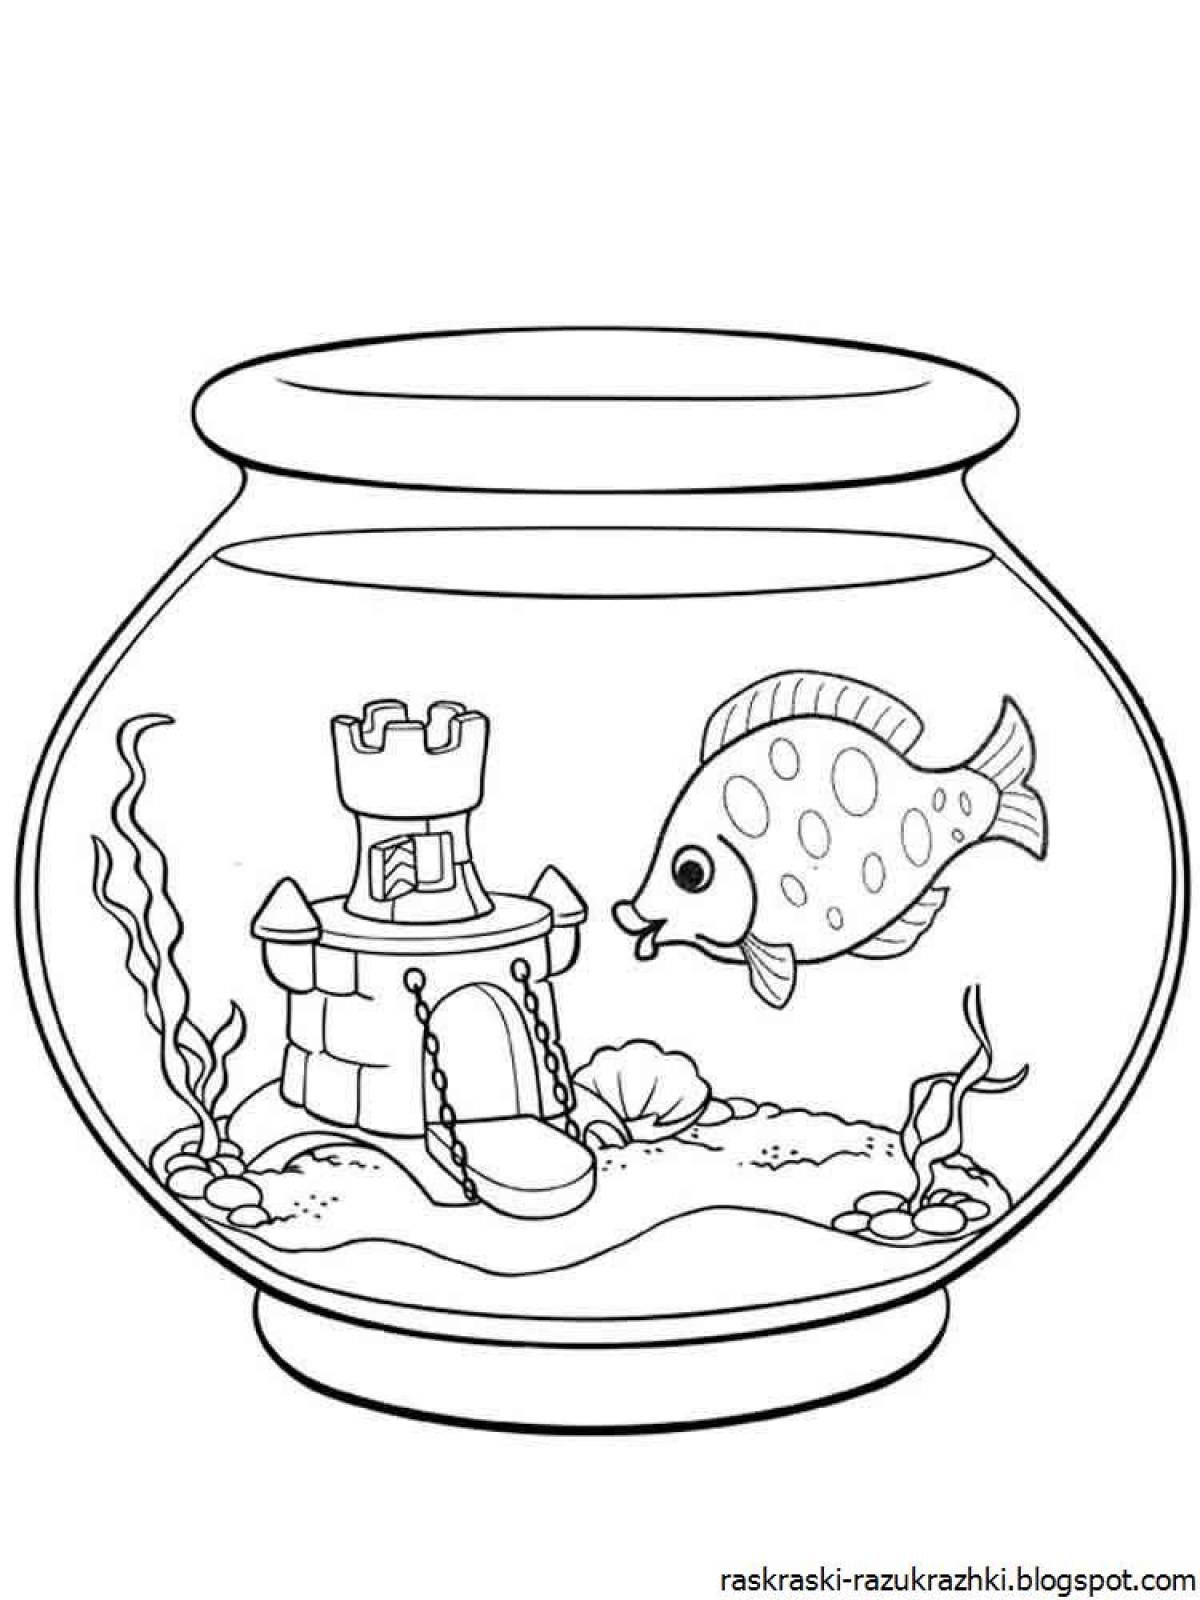 Playful aquarium coloring page for little ones